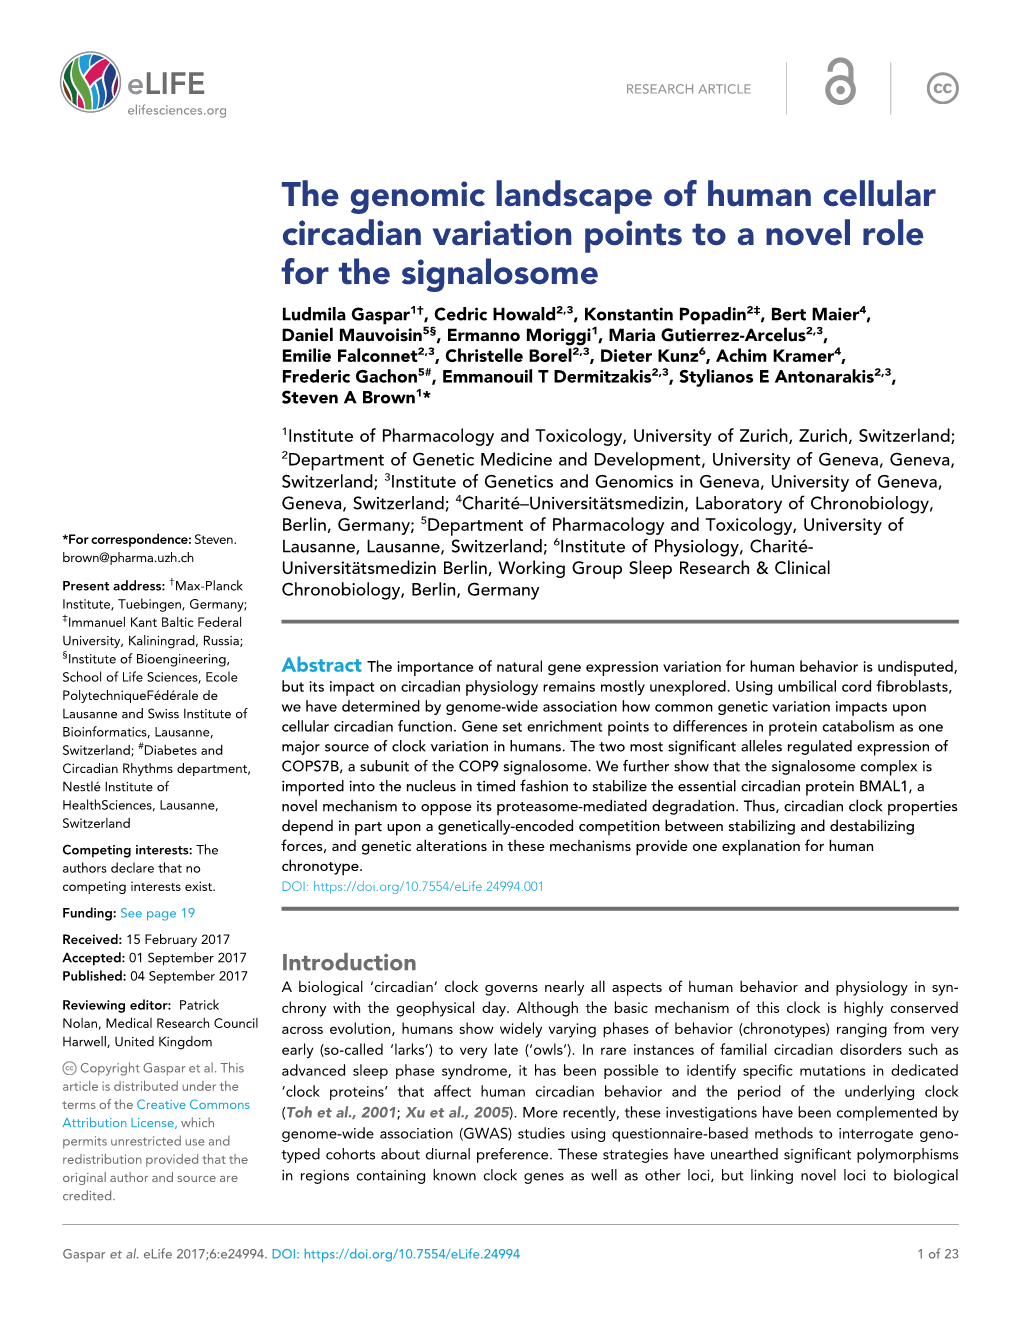 The Genomic Landscape of Human Cellular Circadian Variation